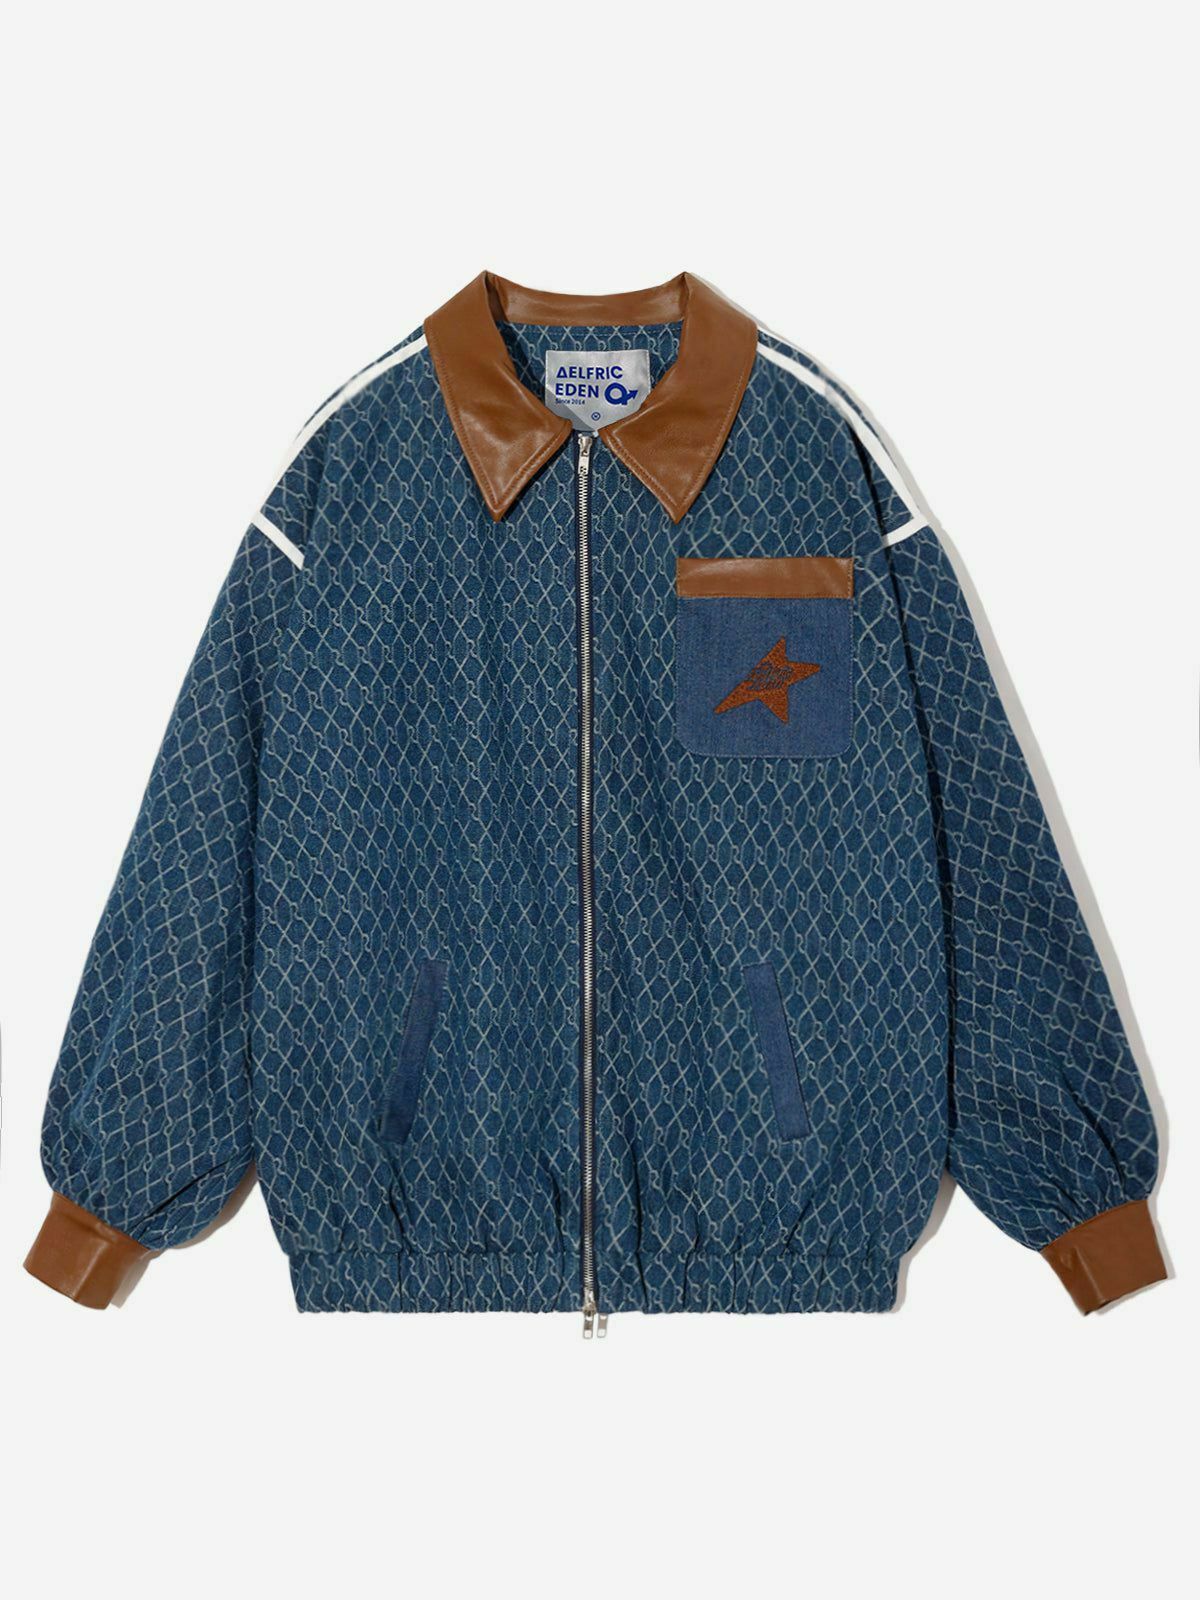 vintage denim jacquard jacket   chic urban streetwear 3366